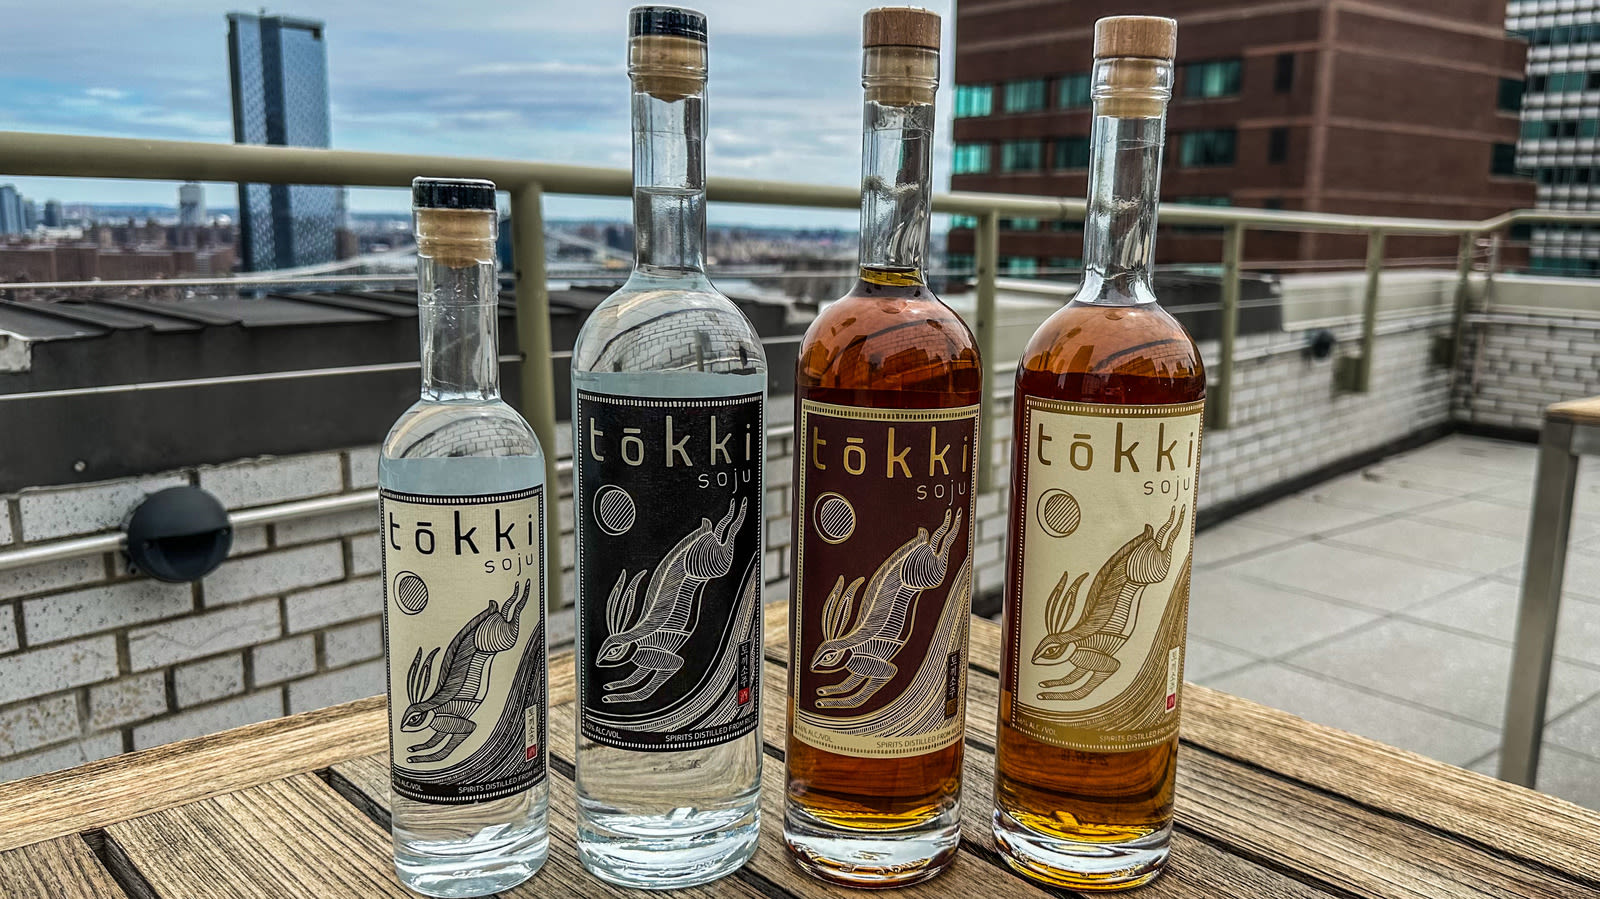 Tōkki Soju: The Ultimate Bottle Guide